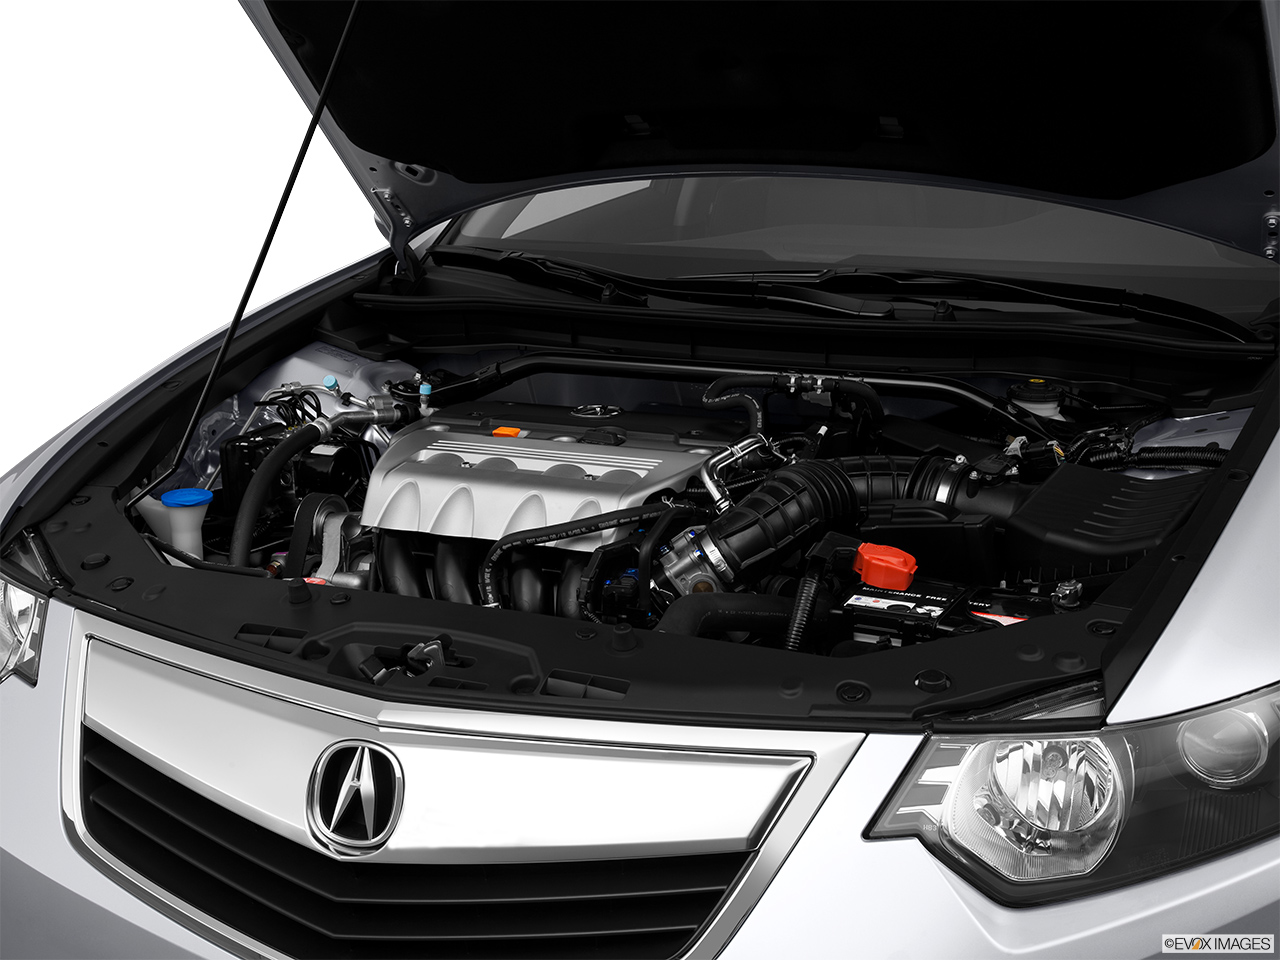 2013 Acura TSX 5-speed Automatic Engine. 